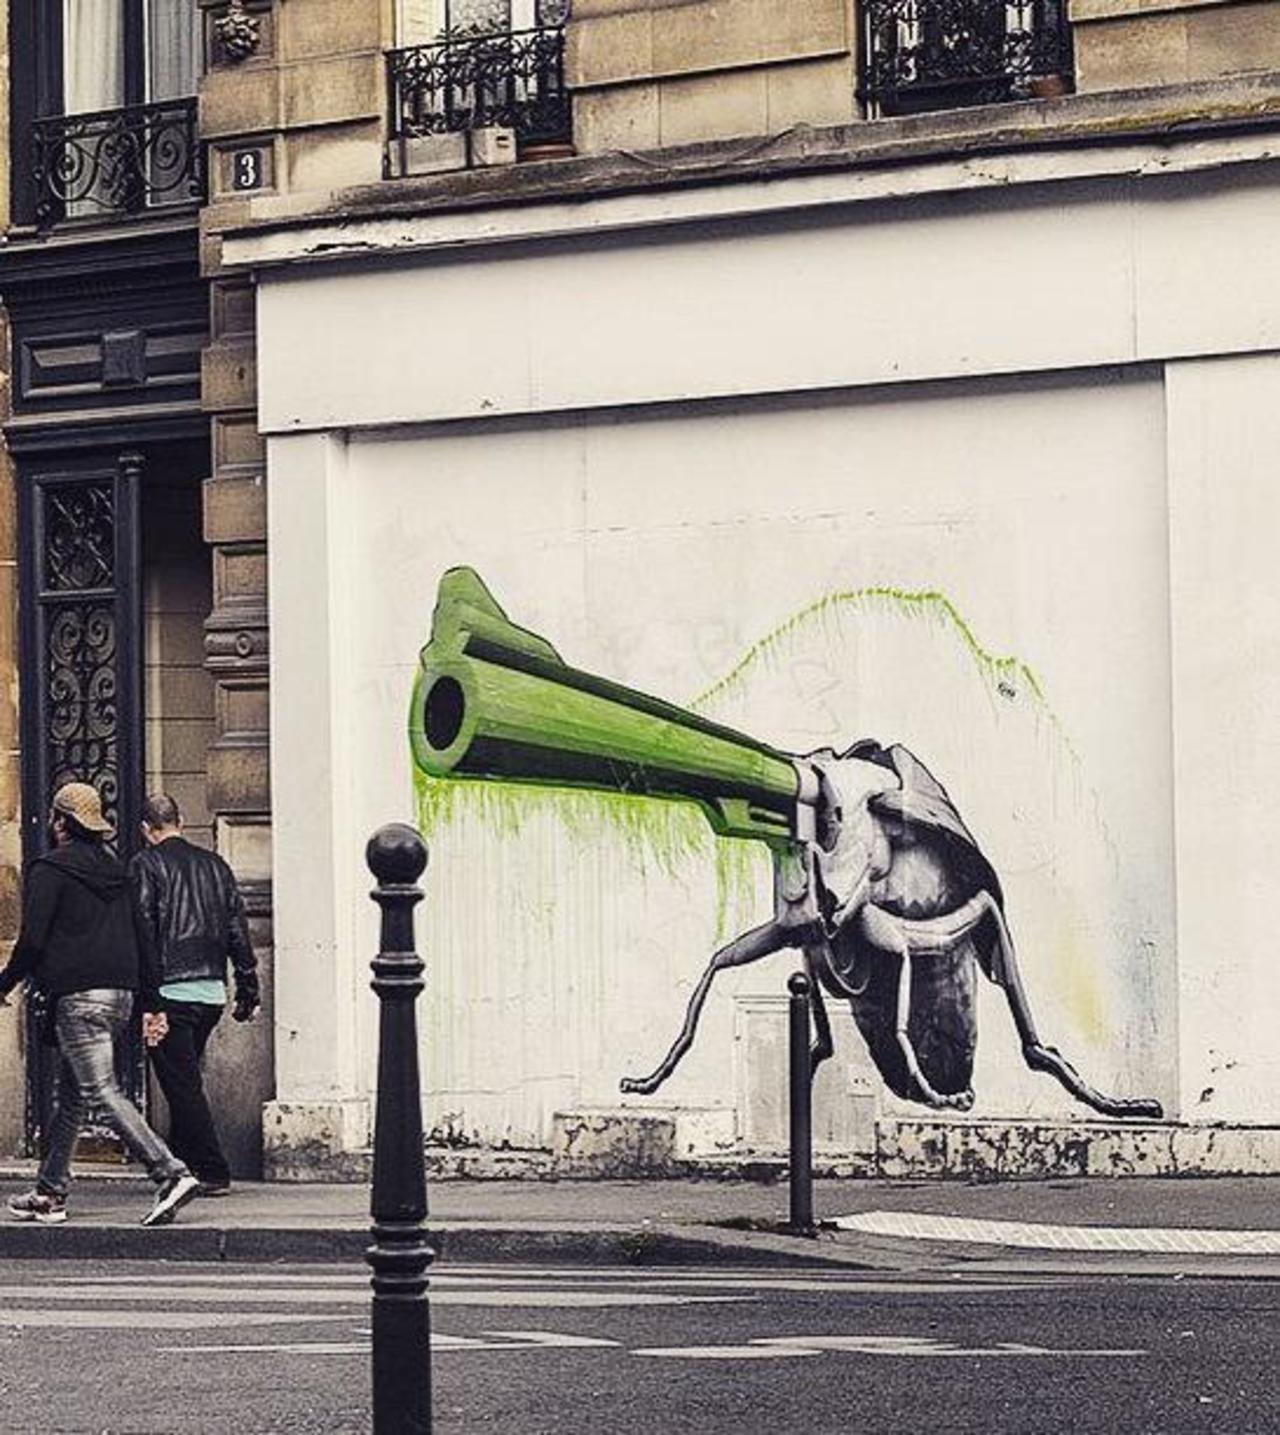 Technology merges with nature.
Street Art by Ludo in Paris 

#art #arte #graffiti #streetart http://t.co/kxgd7bMhZ7